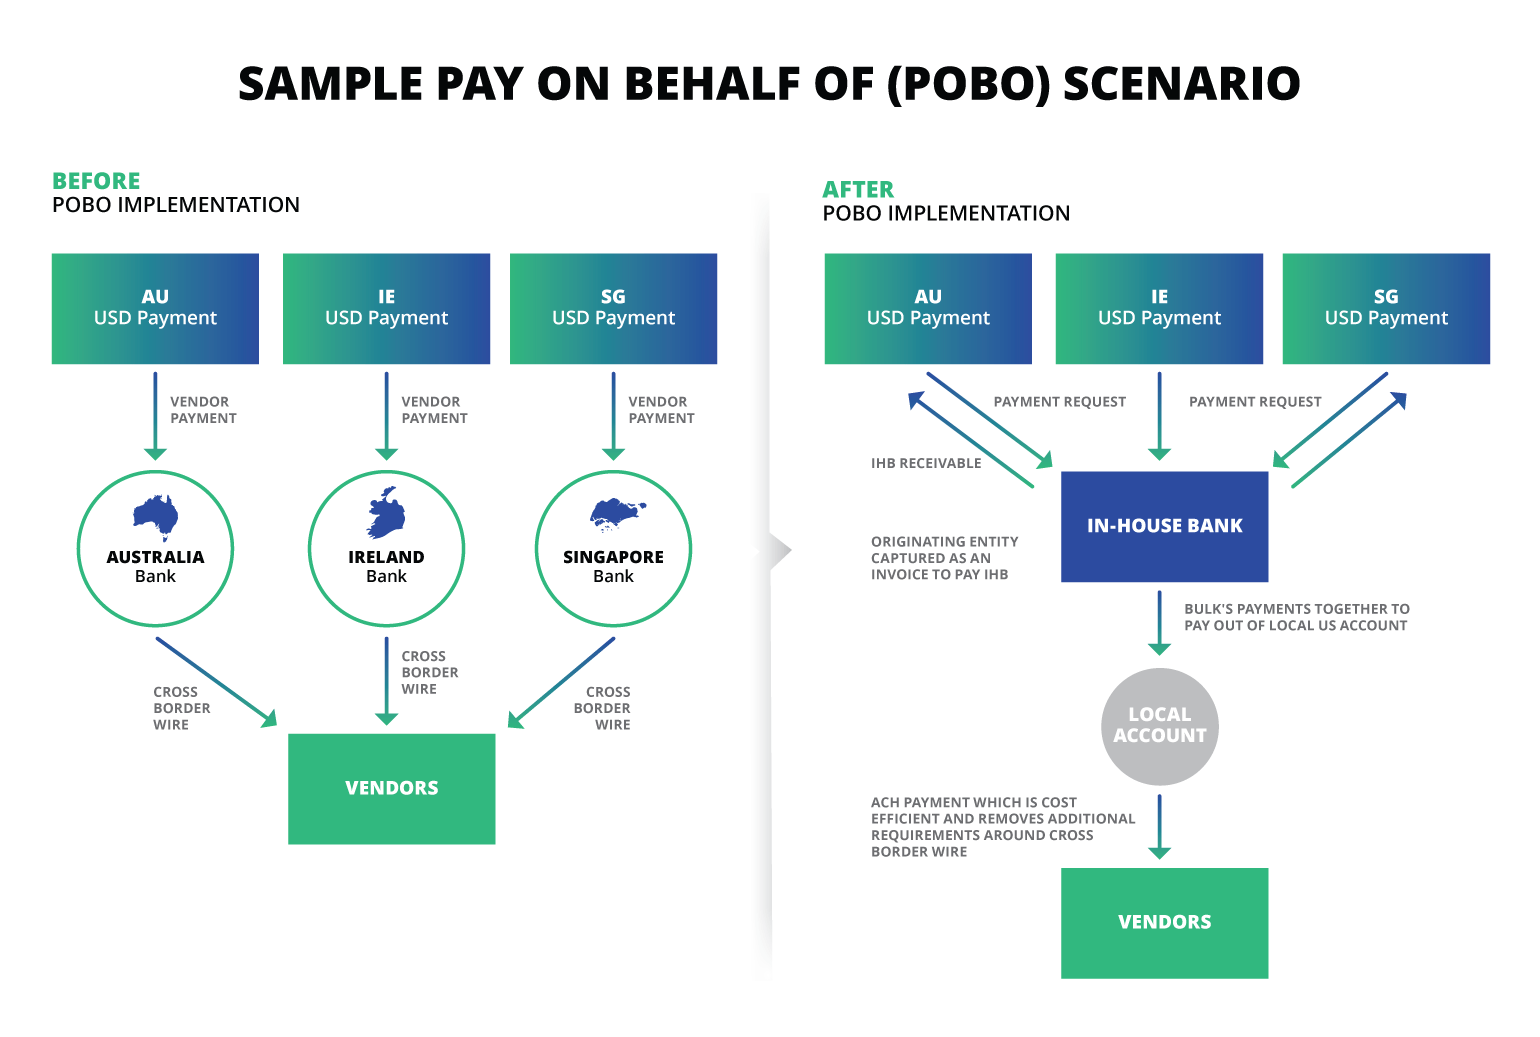 Sample Pay On Behalf of (POBO) Scenario